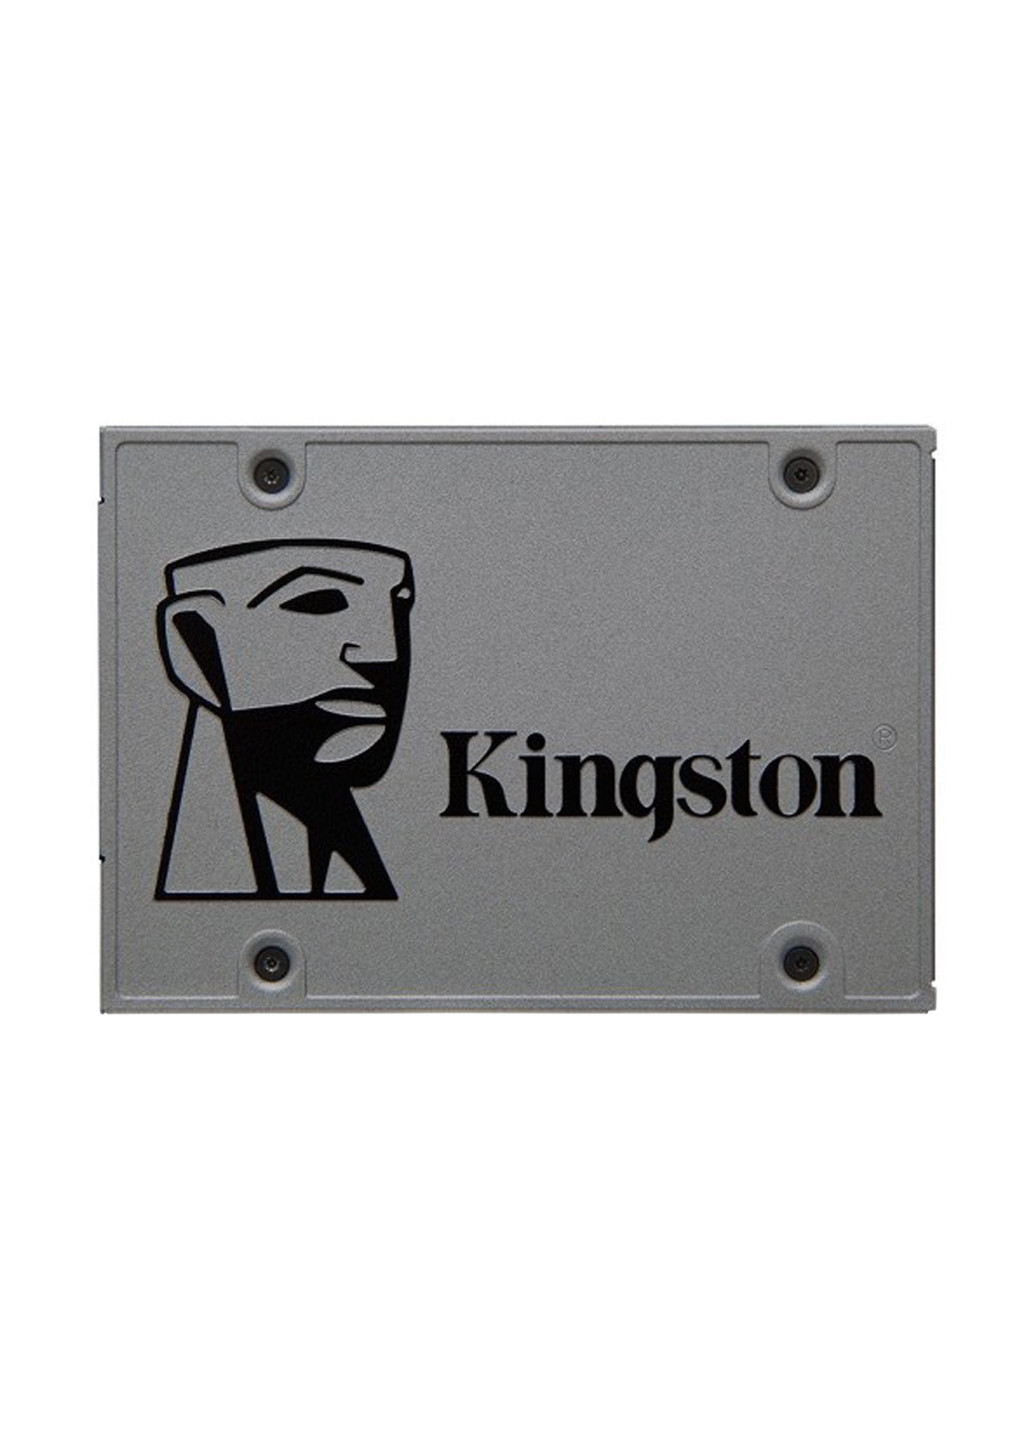 Внутренний SSD UV500 Upgrade Kit 480GB 2.5" SATAIII 3D NAND TLC (SUV500B/480G) Kingston внутренний ssd kingston uv500 upgrade kit 480gb 2.5" sataiii 3d nand tlc (suv500b/480g) (136894000)